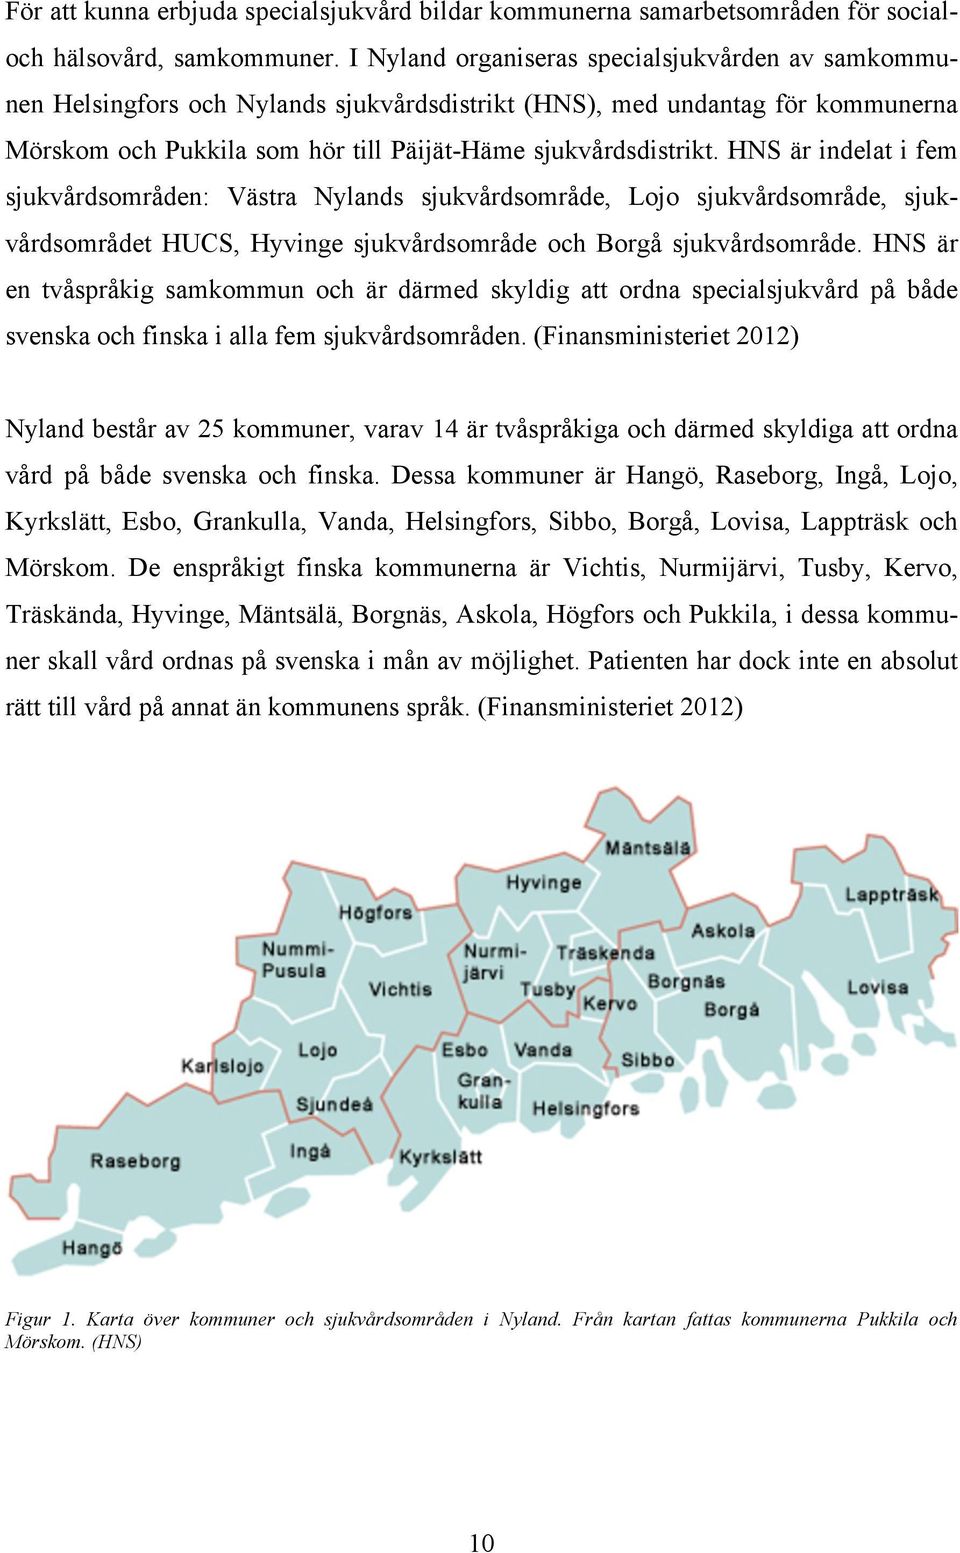 HNS är indelat i fem sjukvårdsområden: Västra Nylands sjukvårdsområde, Lojo sjukvårdsområde, sjukvårdsområdet HUCS, Hyvinge sjukvårdsområde och Borgå sjukvårdsområde.